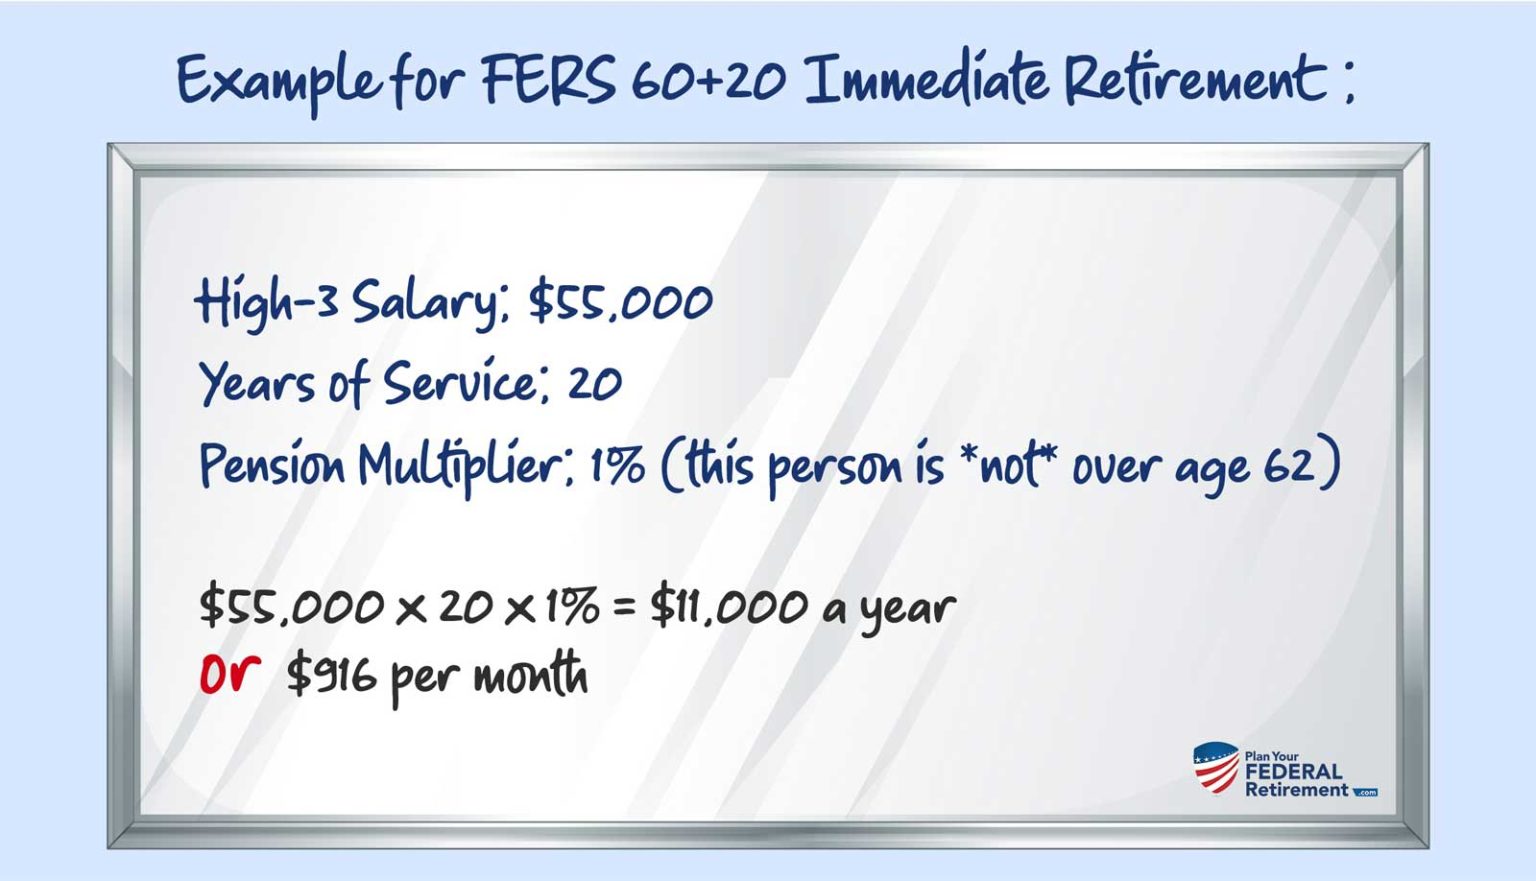 FERS Immediate Retirement Plan Your Federal Retirement